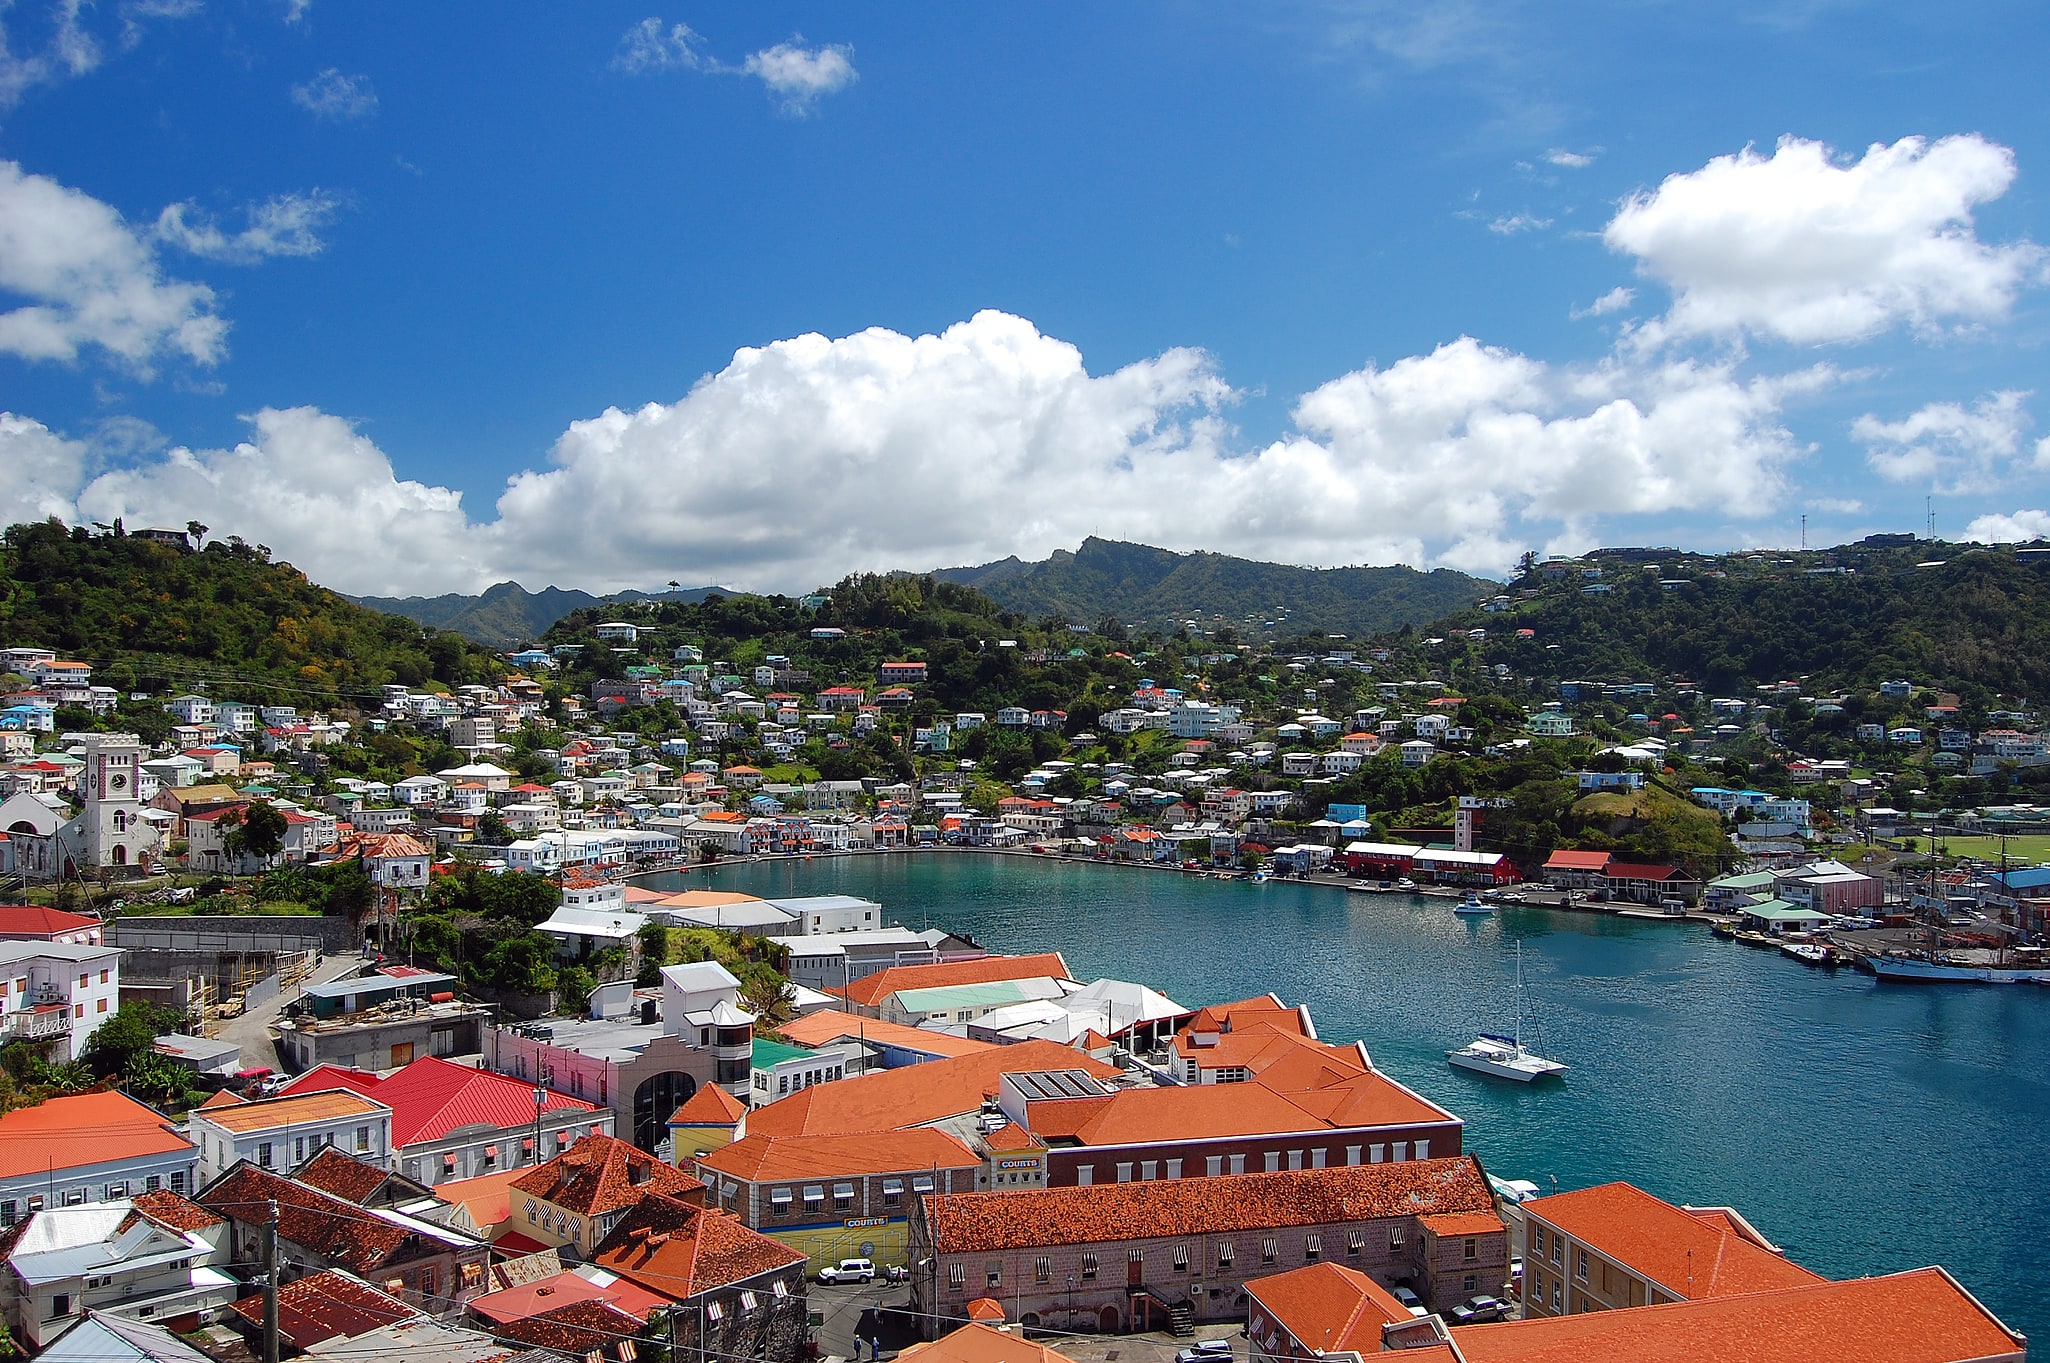 Saint George’s, Grenada